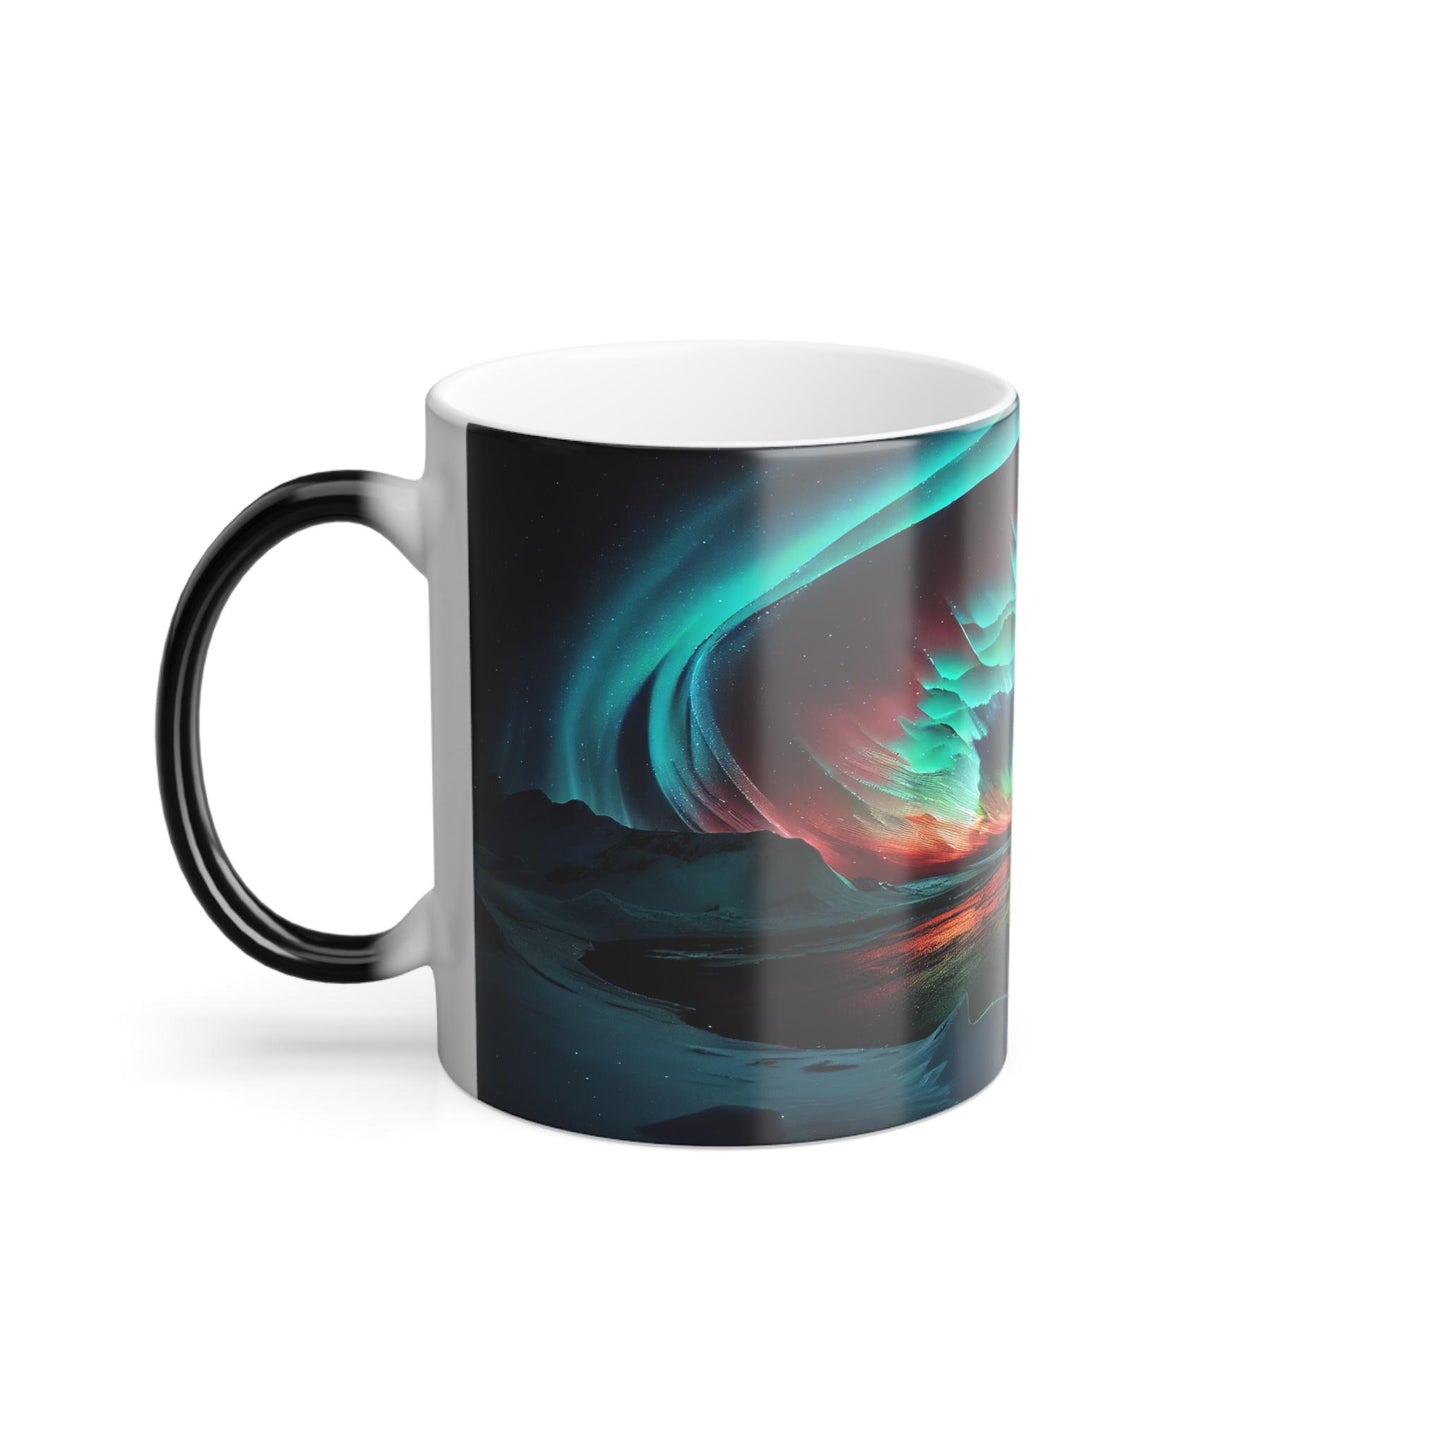 Enchanting Aurora Borealis Heat Sensitive Mug - Northern Lights Magic Color Morphing Mug 11oz - Heat Reactive Night Sky Coffee Cup - Perfect Gift for Nature Lovers 24